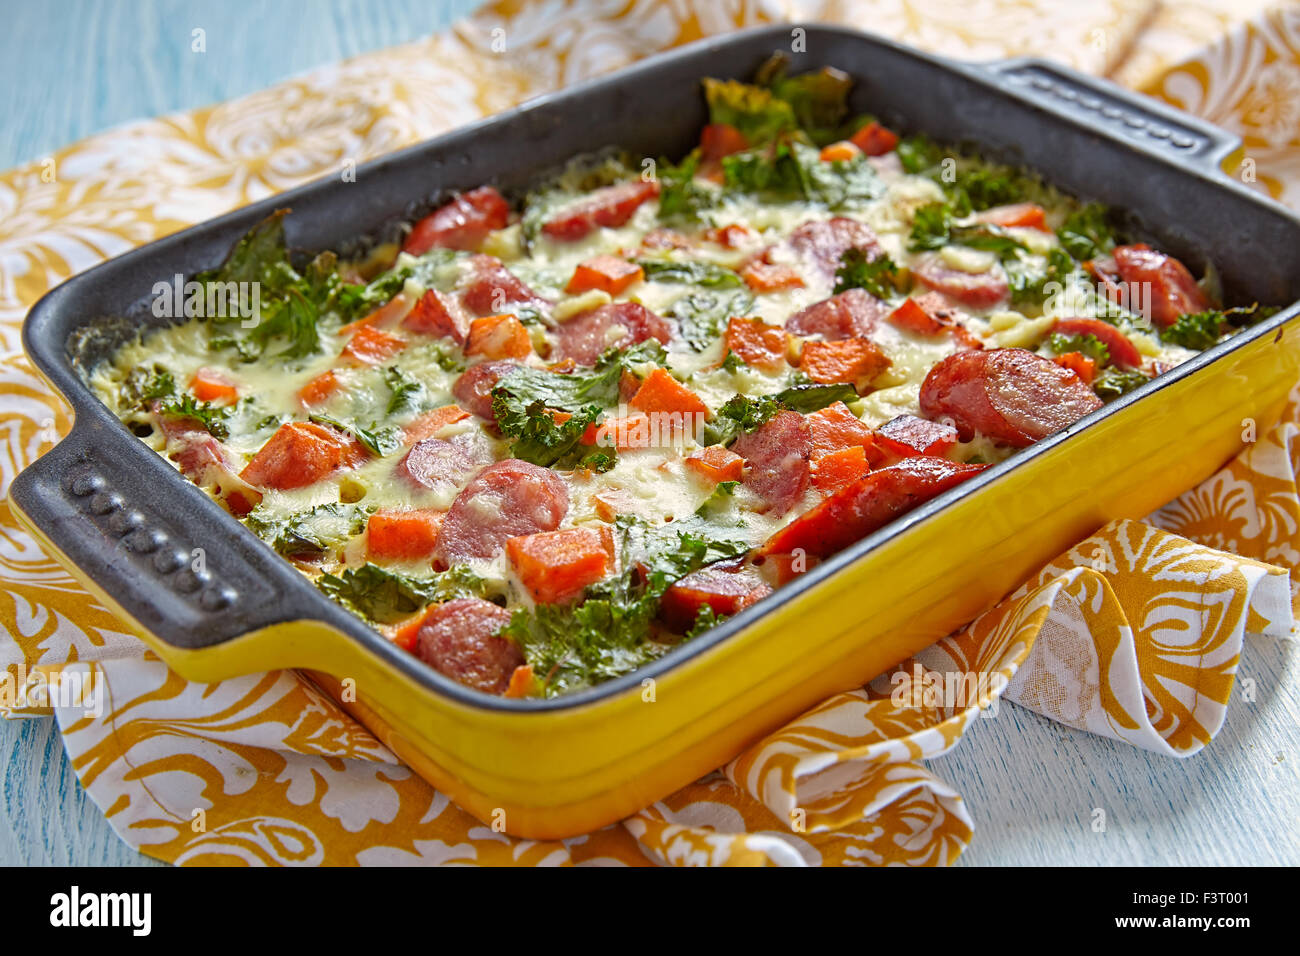 Autumn casserole with sweet potato and kale Stock Photo